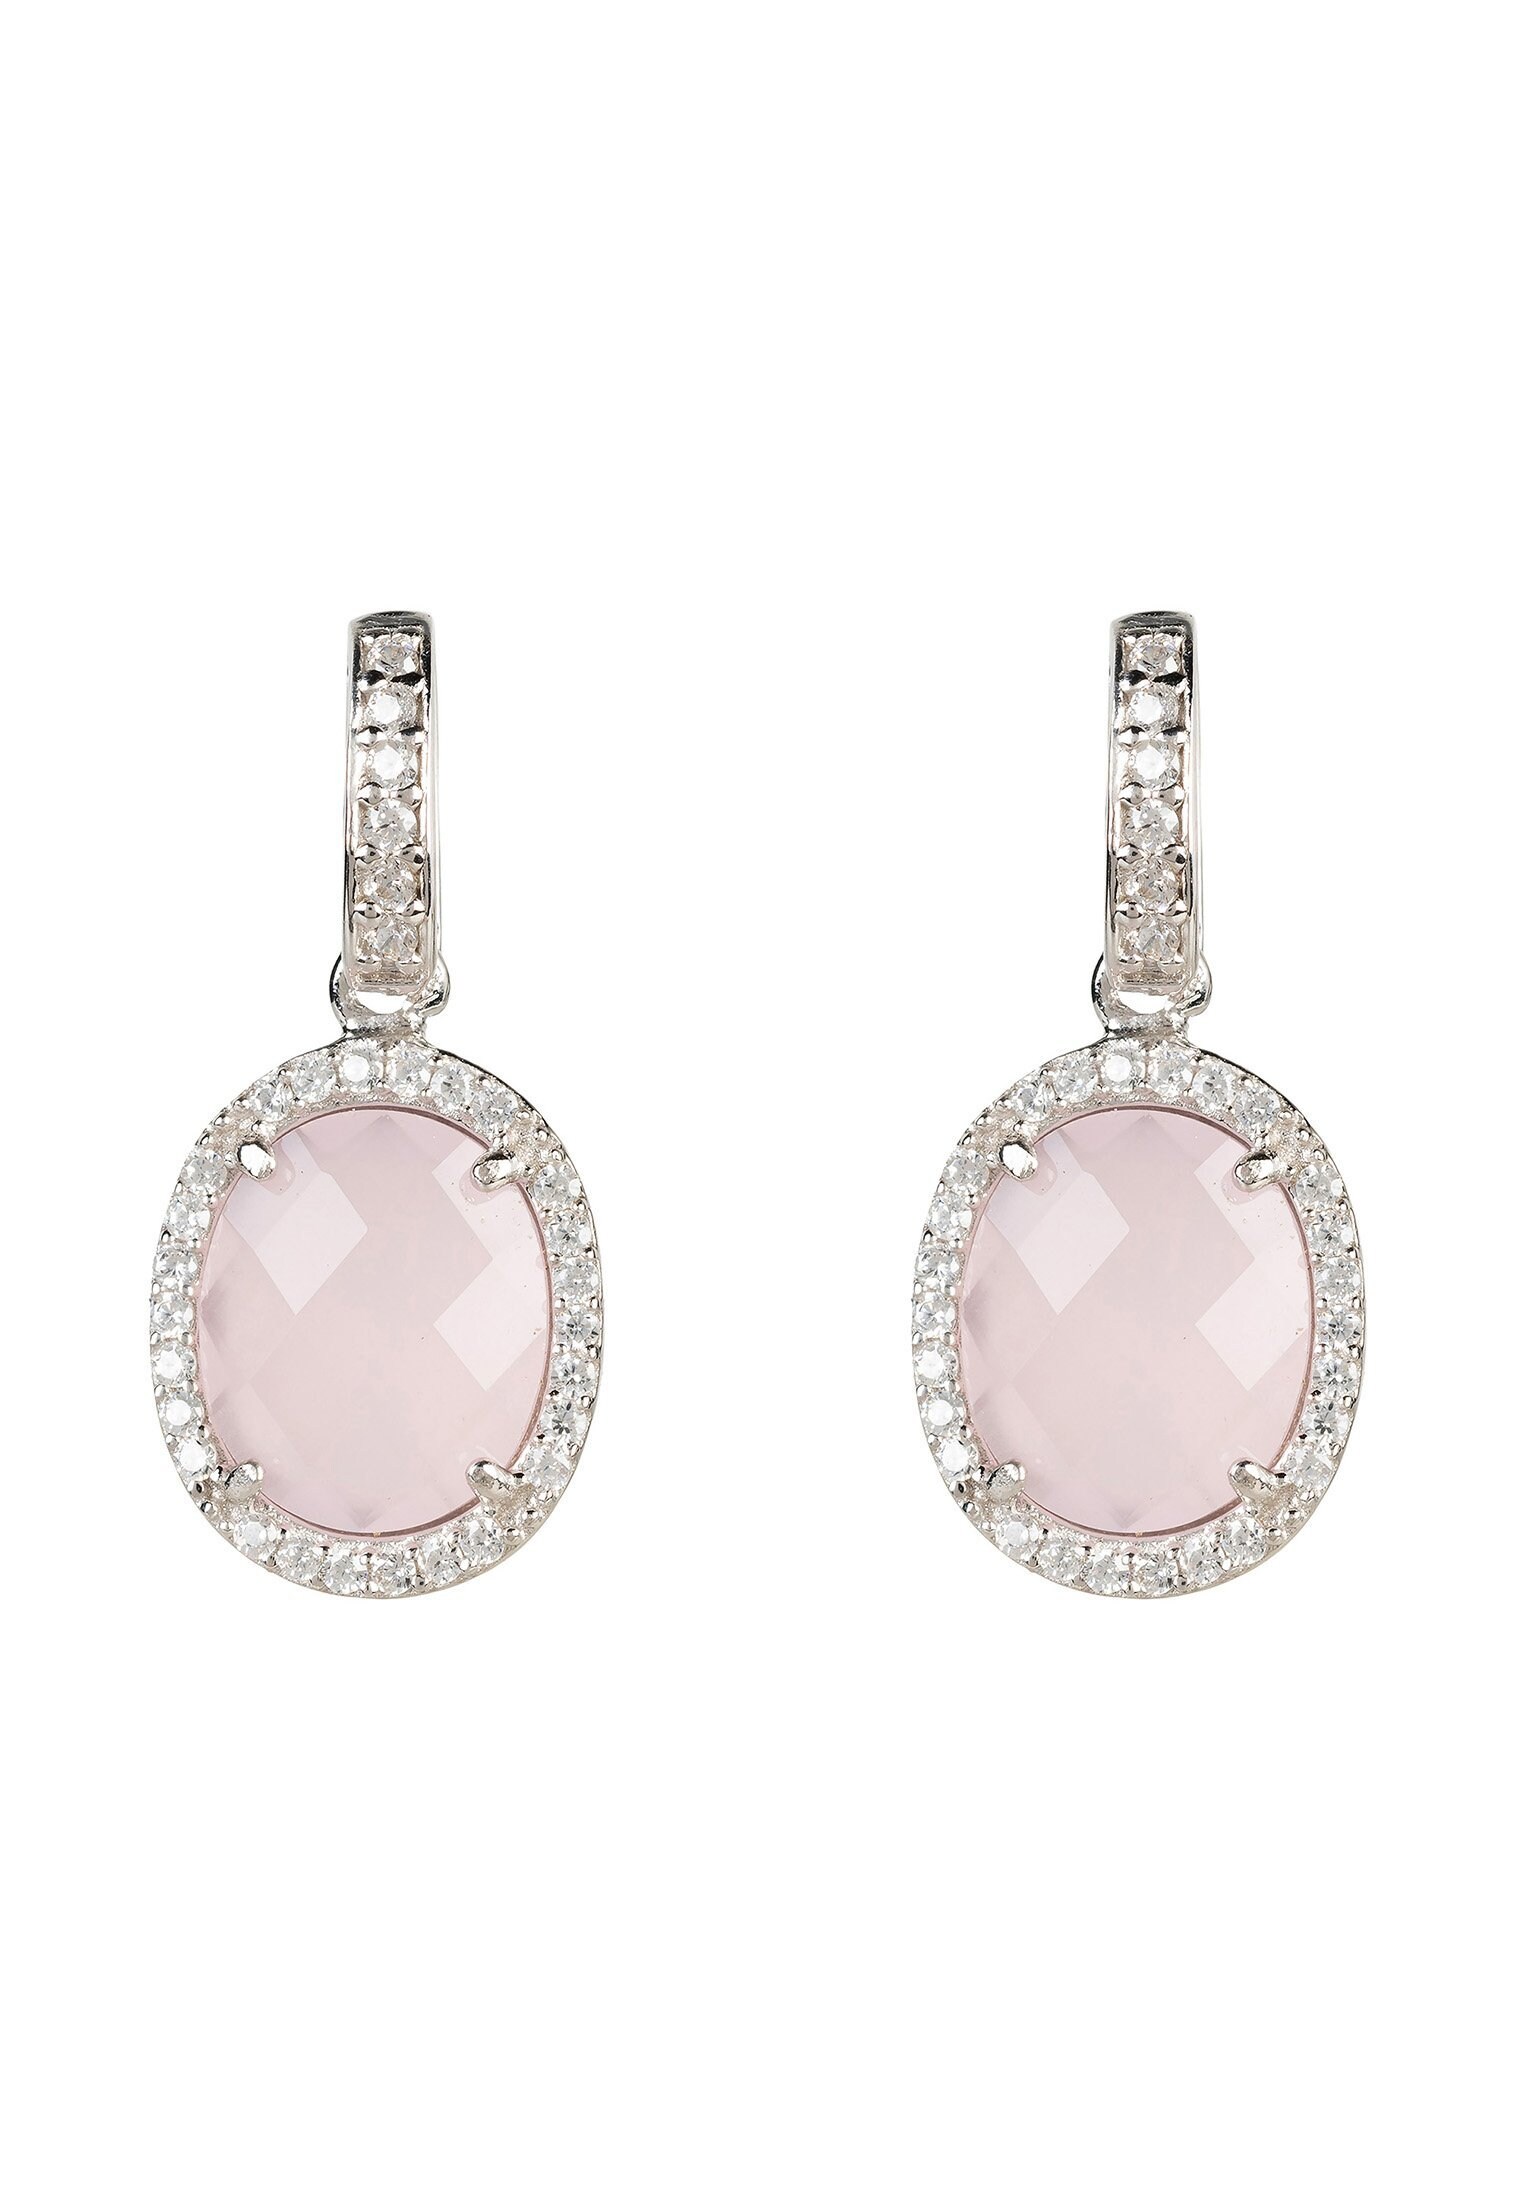 Earrings Silver Rose Quartz Pink Stud Gemstone Dangle Gift 925 | Etsy